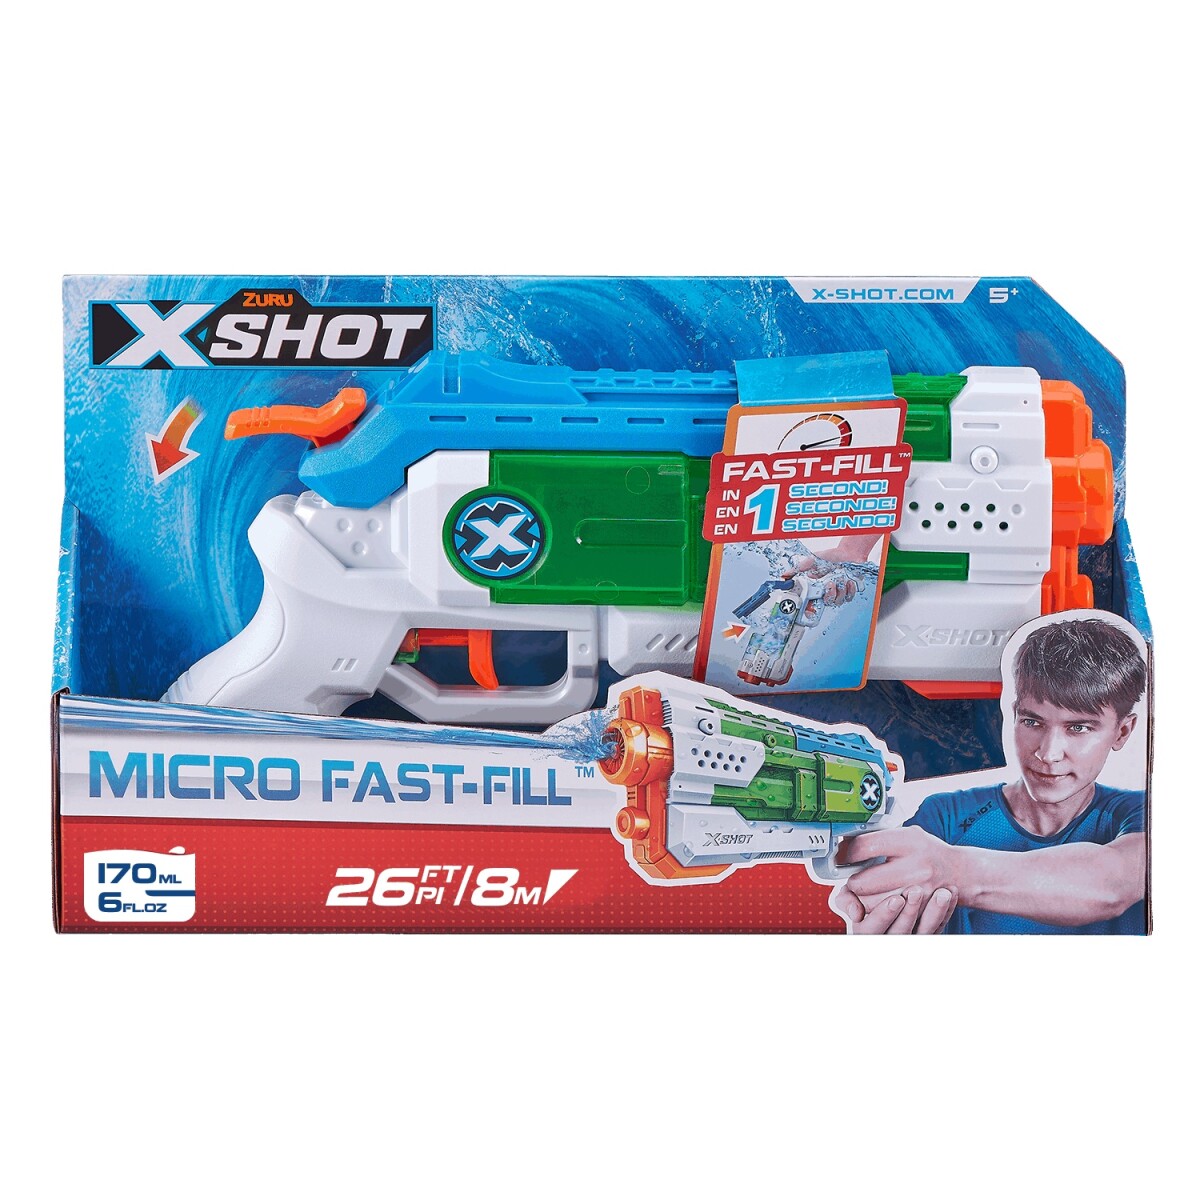 Pistola de Agua X-shot Water Micro Fast Fill - 001 